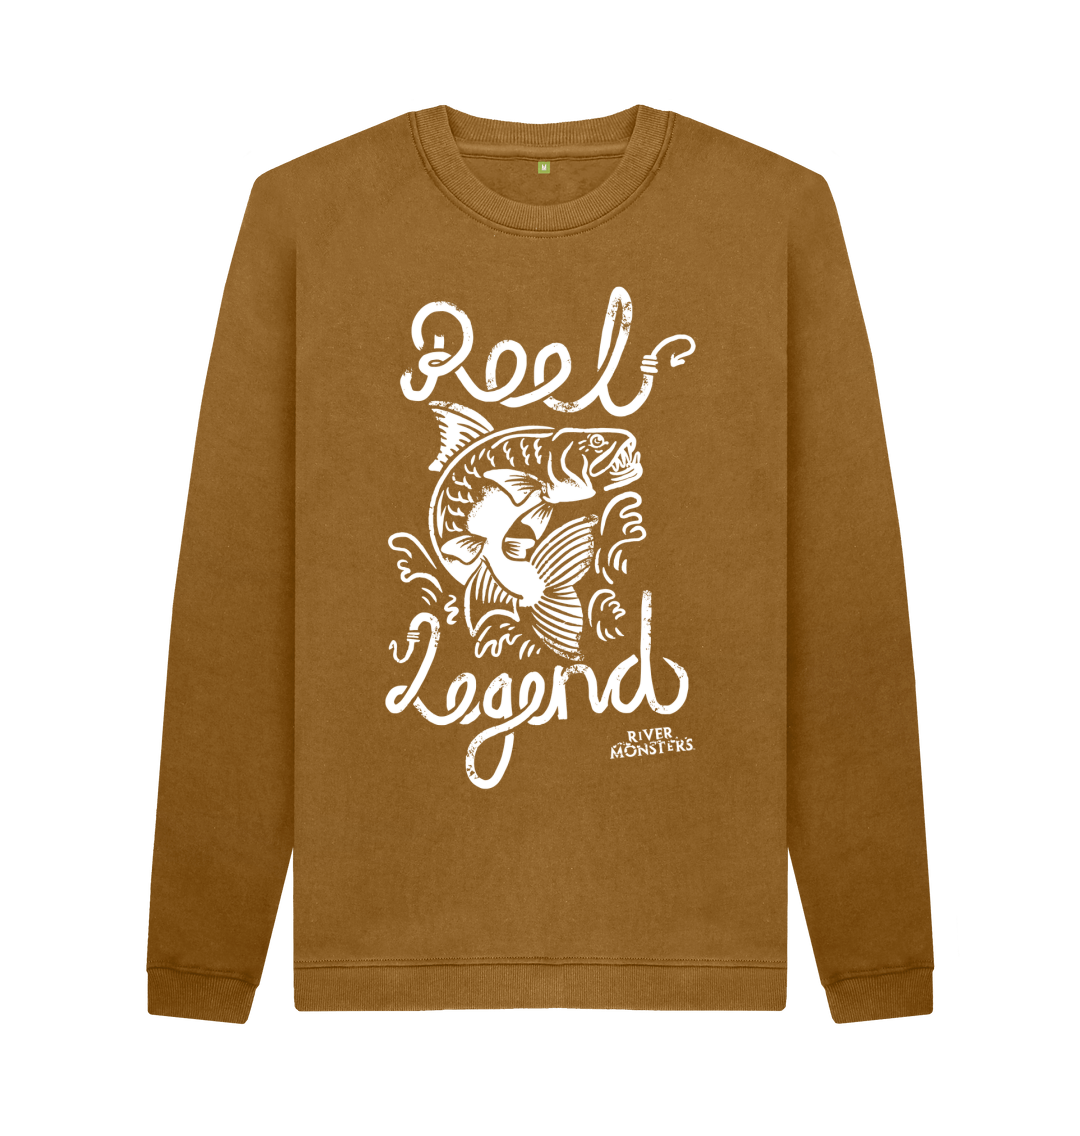 Reel Legends Long Sleeve Shirts